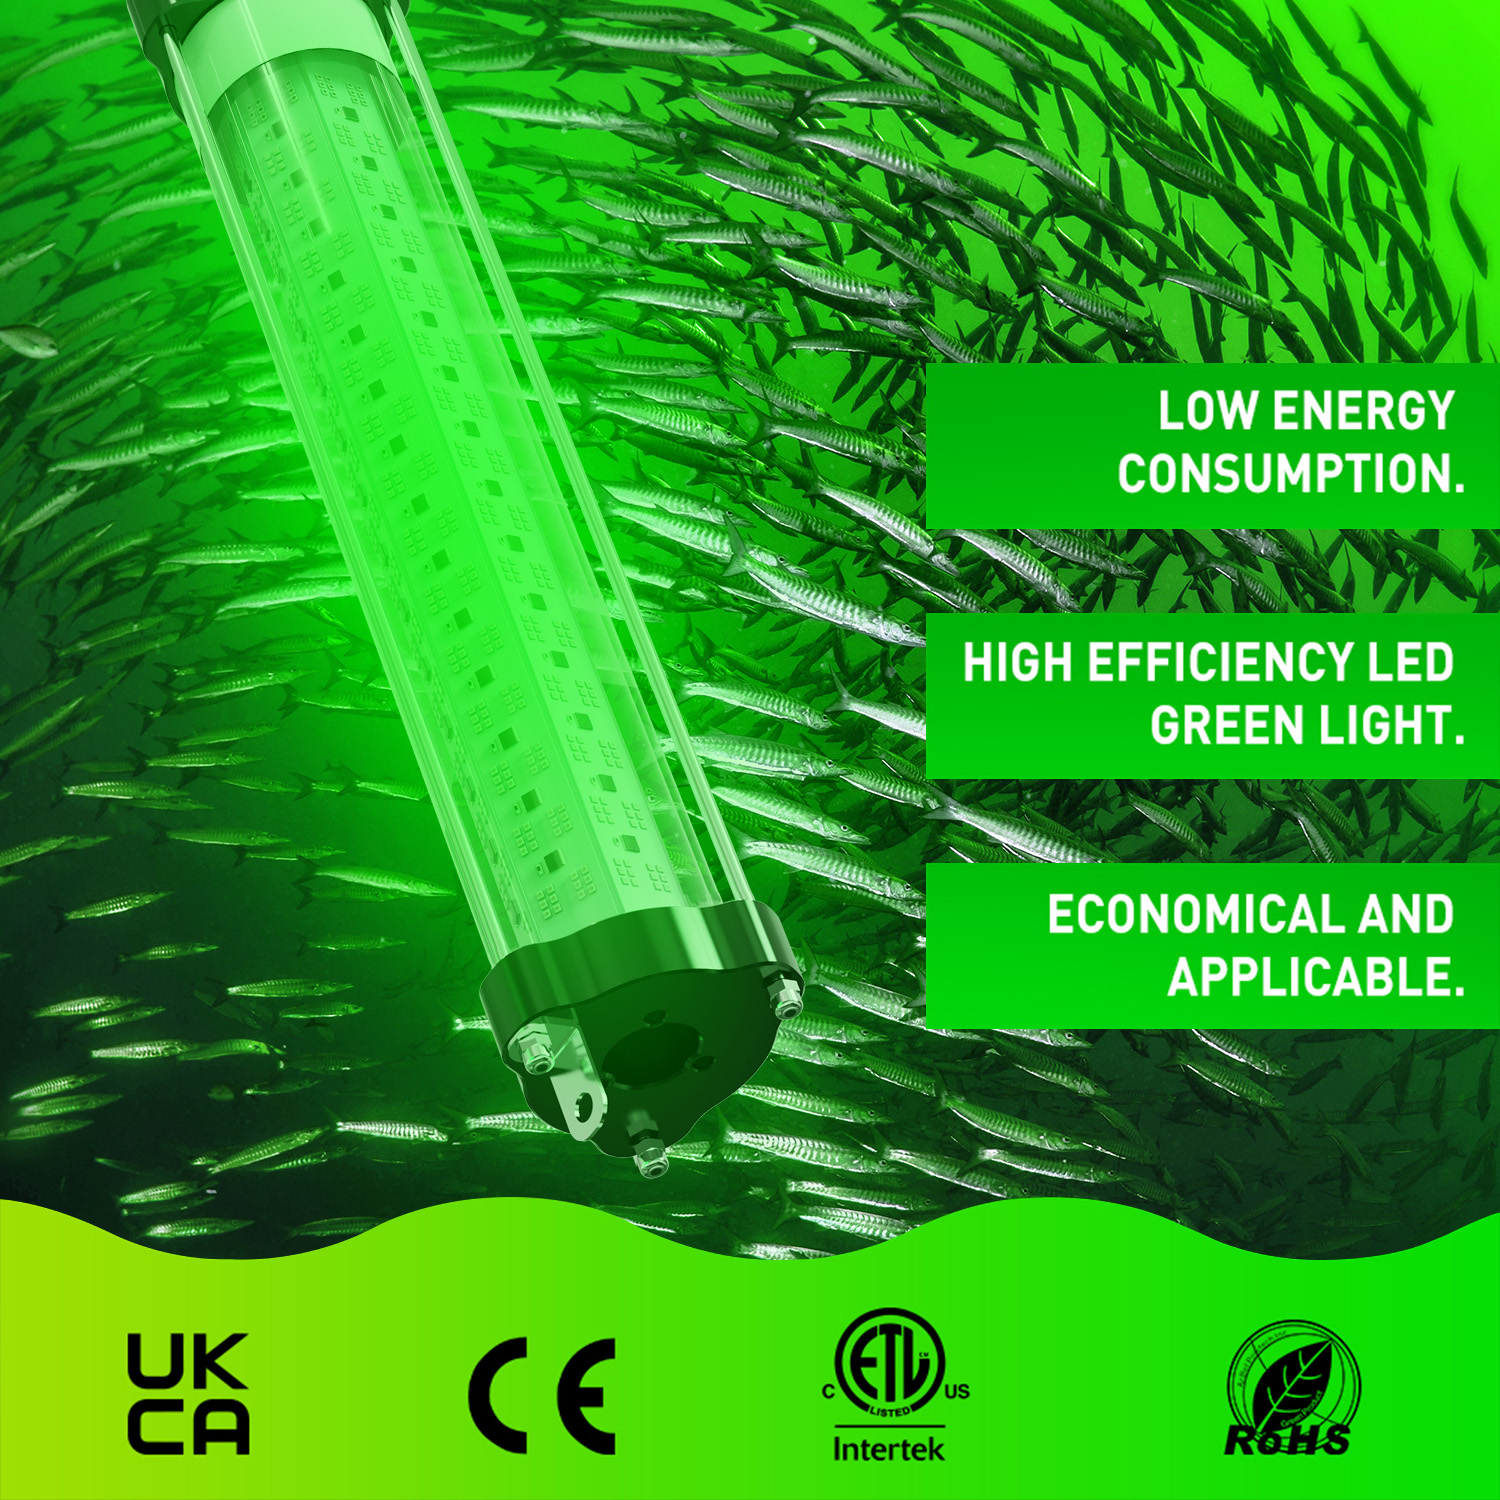 High-Efficiency 1000W Underwater Fishing Light IP68 Waterproof Night Fish Green Light 3000W